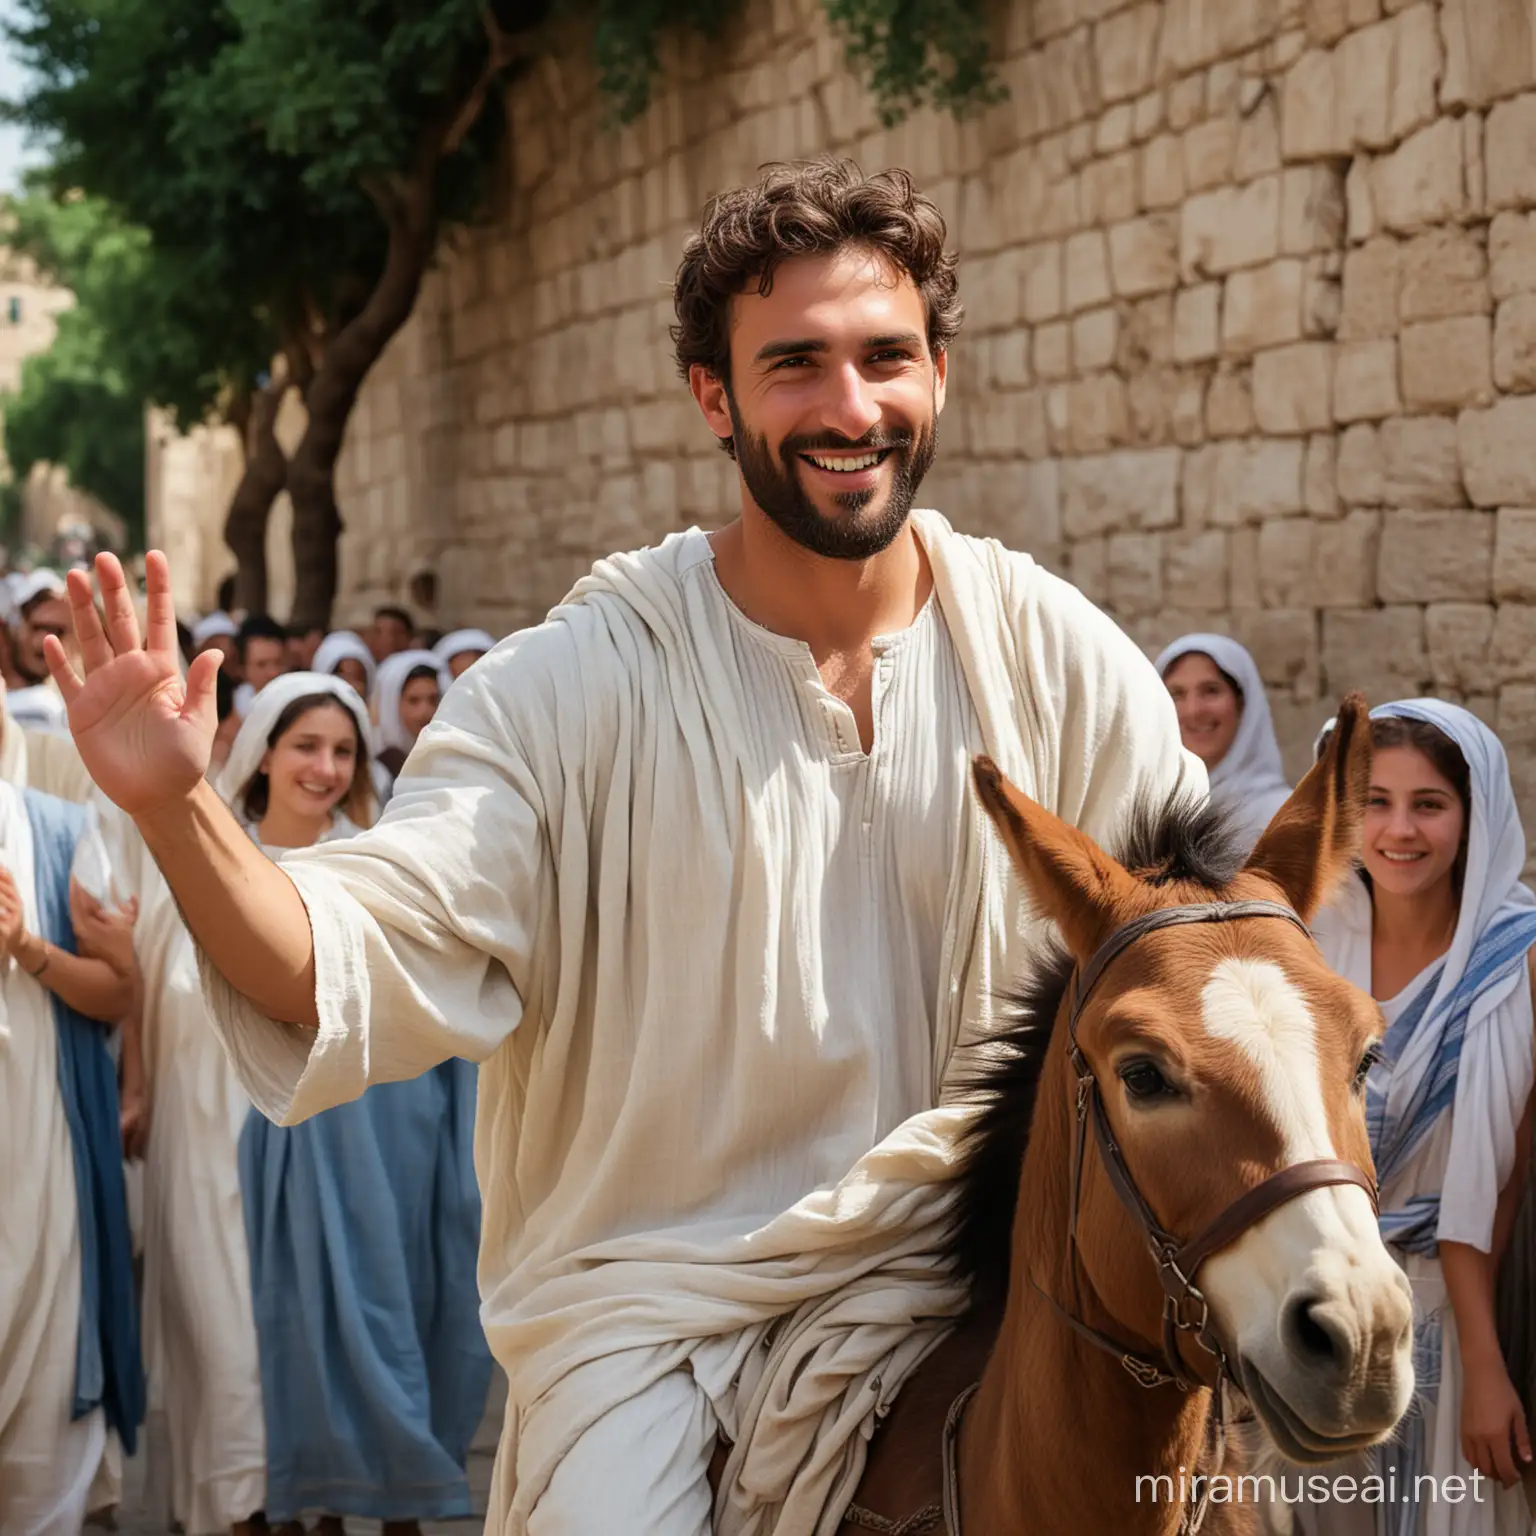 Jewish Man in White Tunic Riding Donkey through Ancient Jerusalem